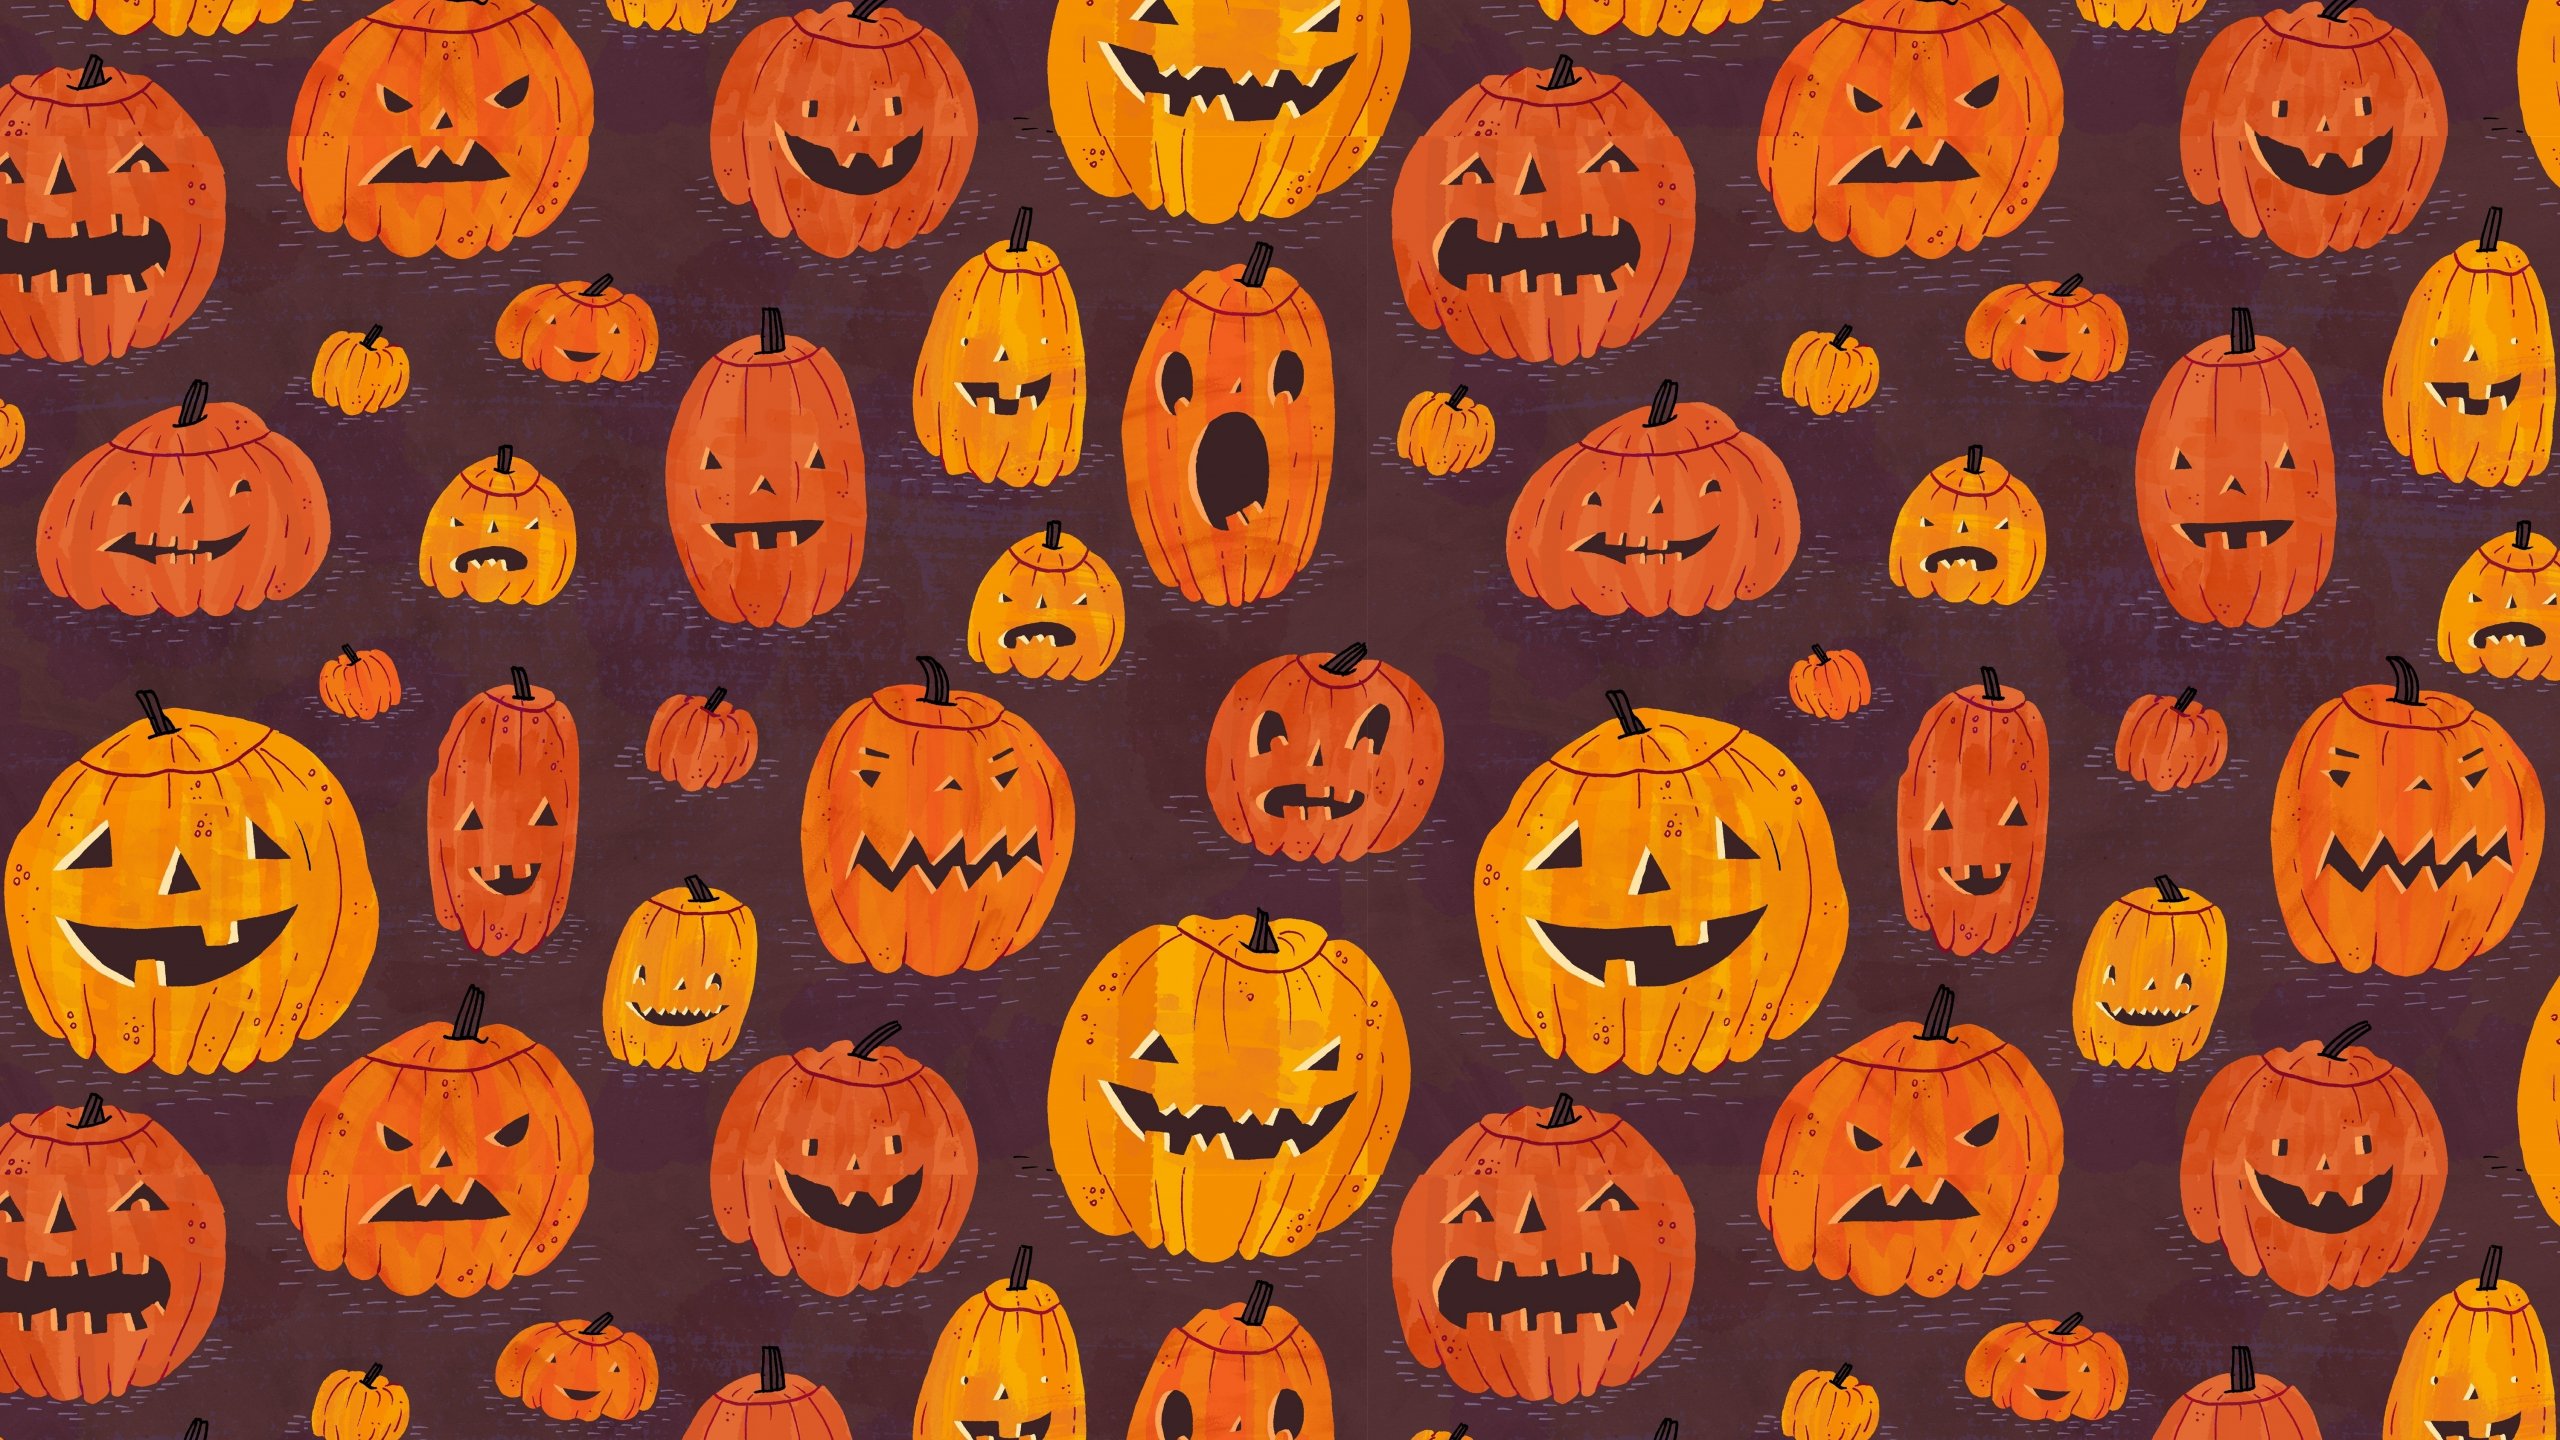 Download 2560x1440 wallpaper pumpkin, pattern, halloween, dual wide, widescreen 16: widescreen, 2560x1440 HD image, background, 464